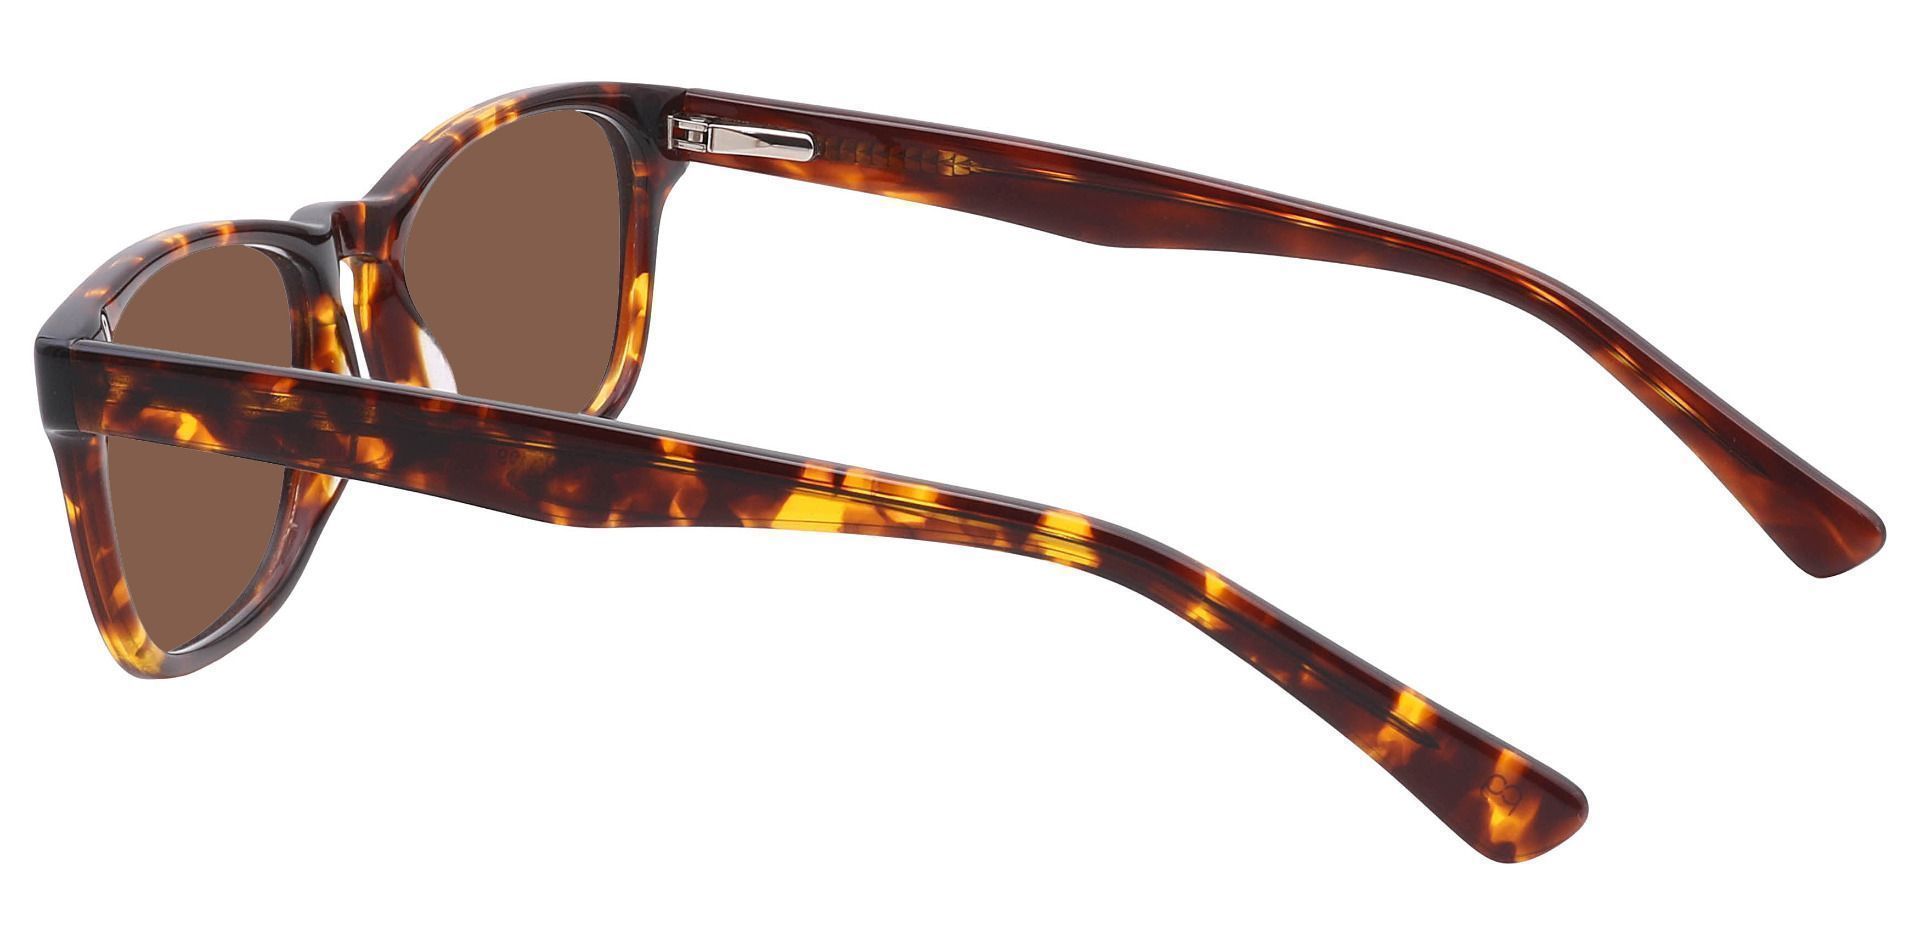 Morris Rectangle Non-Rx Sunglasses - Tortoise Frame With Brown Lenses